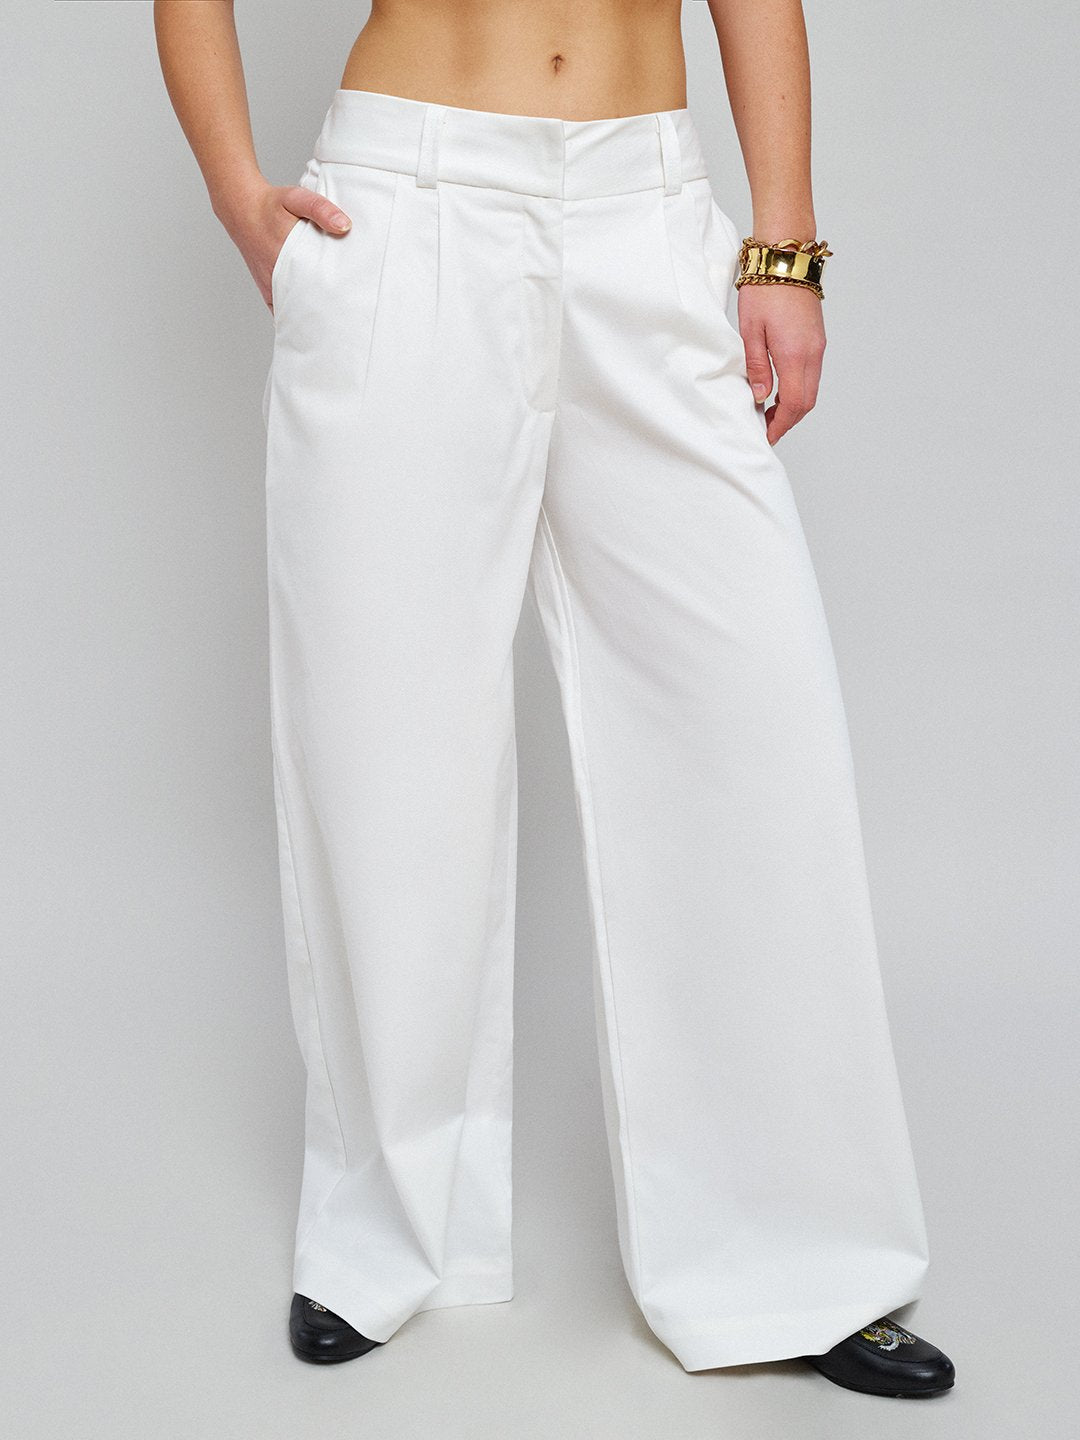 Pantaloons from the 144 Belly Dancer Pattern - Folkwear